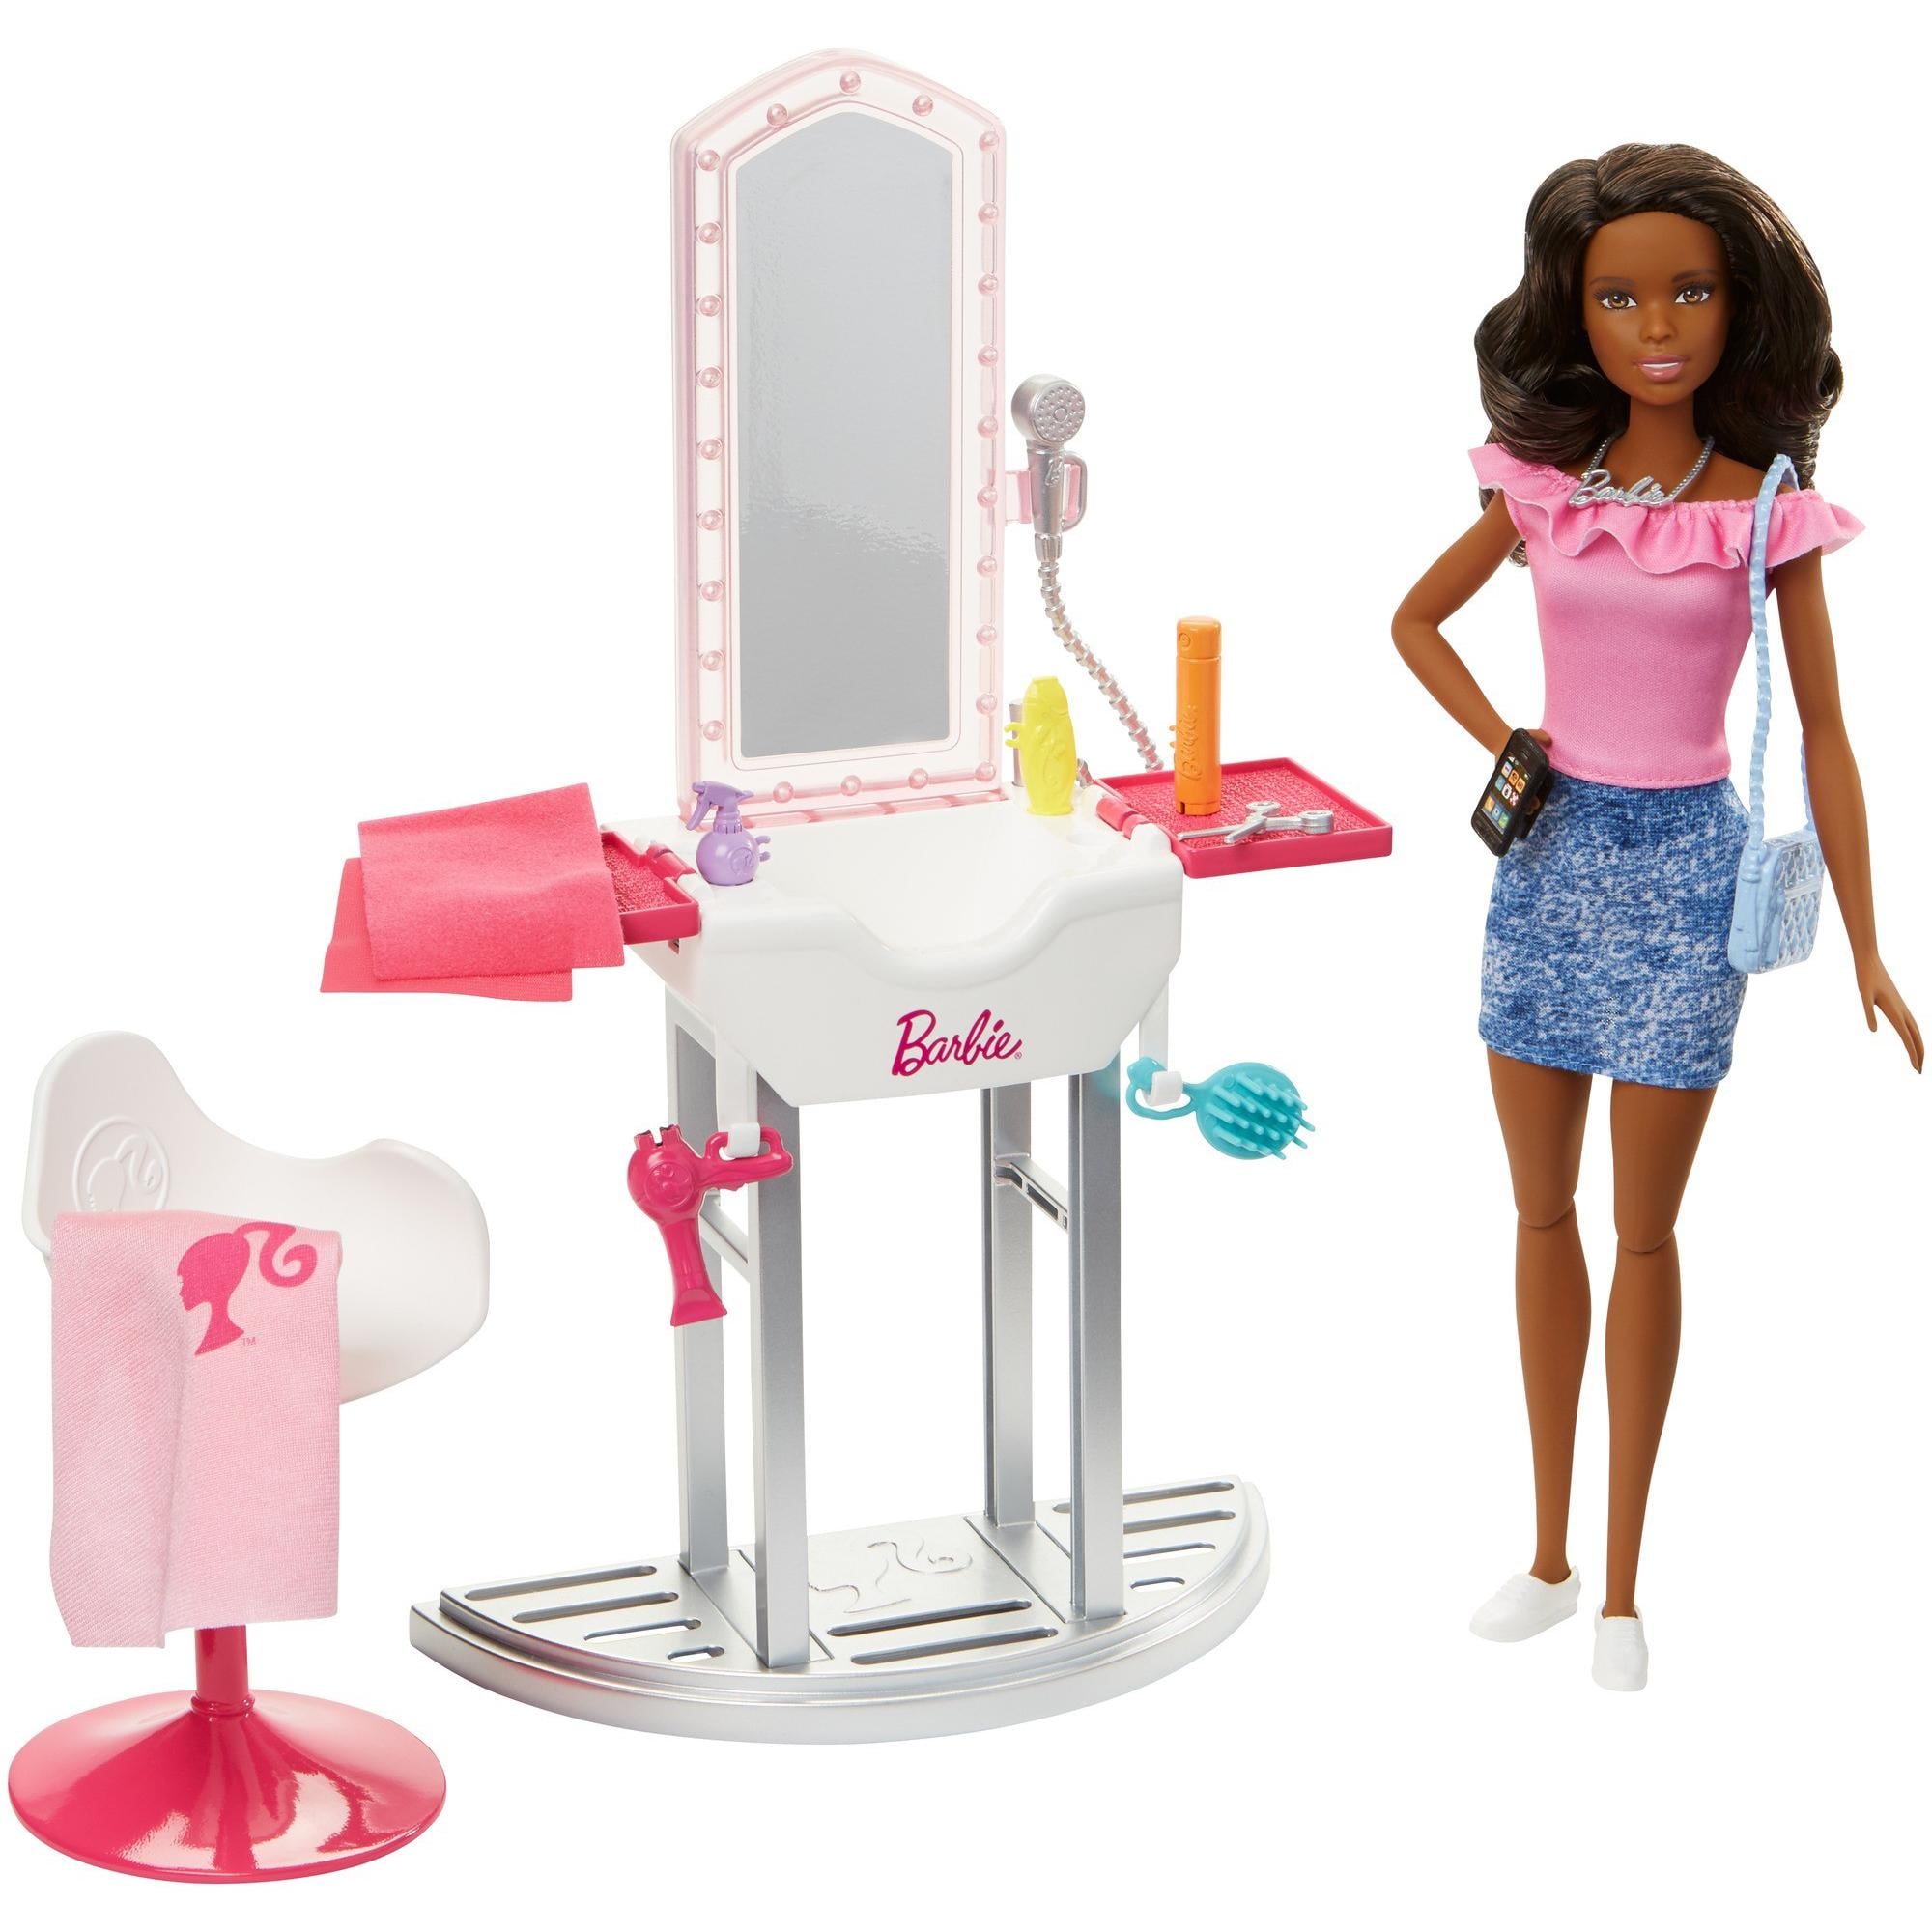 Barbie Salon Station Set with Doll & Accessories, Brunette Doll Furniture